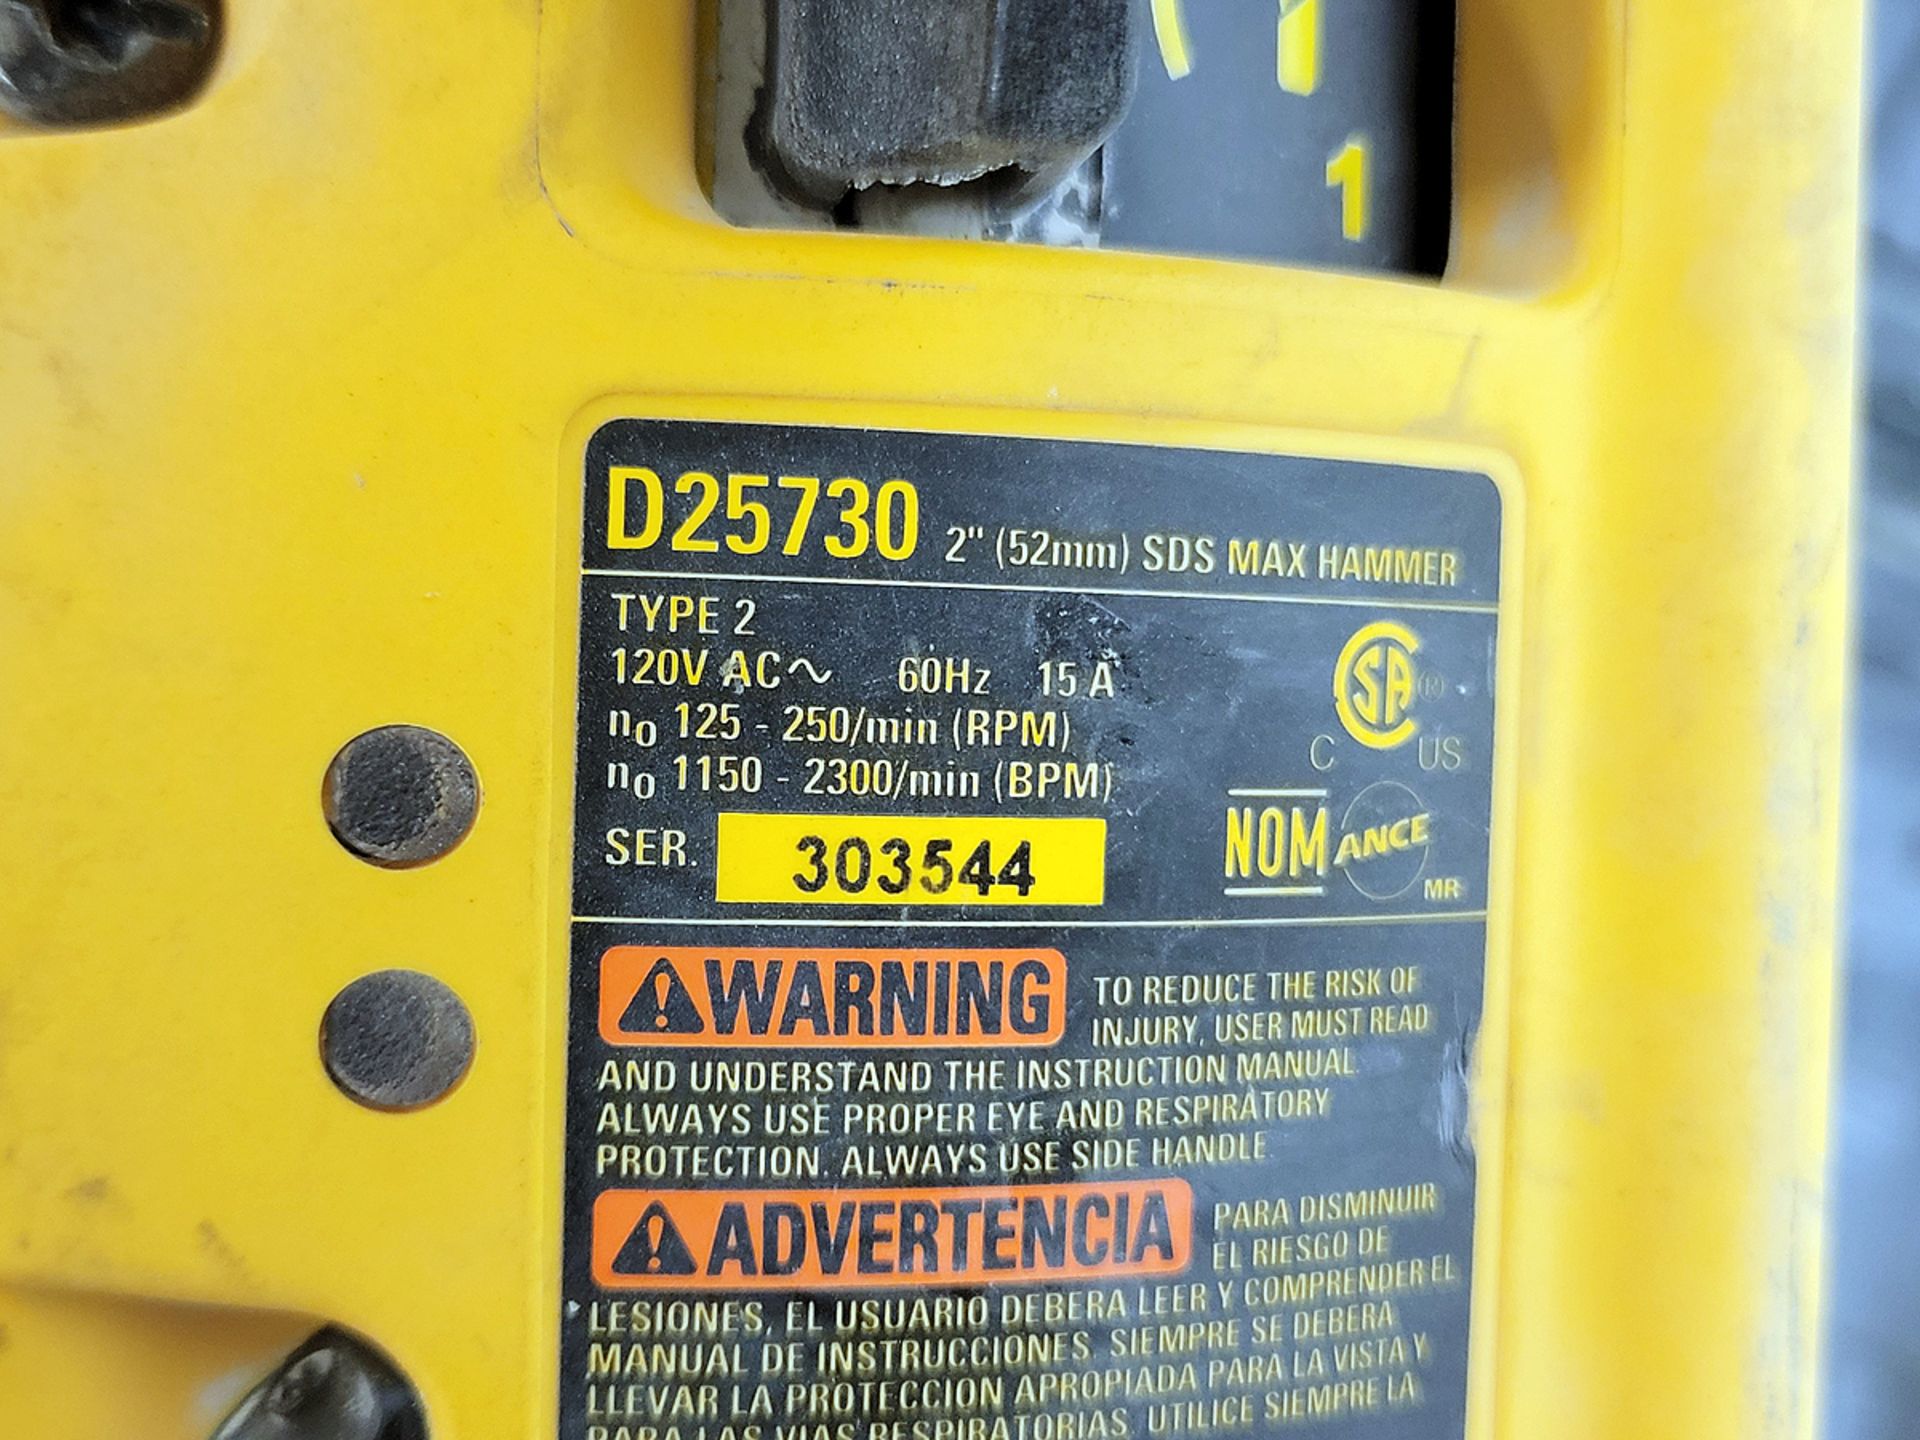 DeWalt D25730 2" SDS Max Hammer Drill w/Case - Image 2 of 2